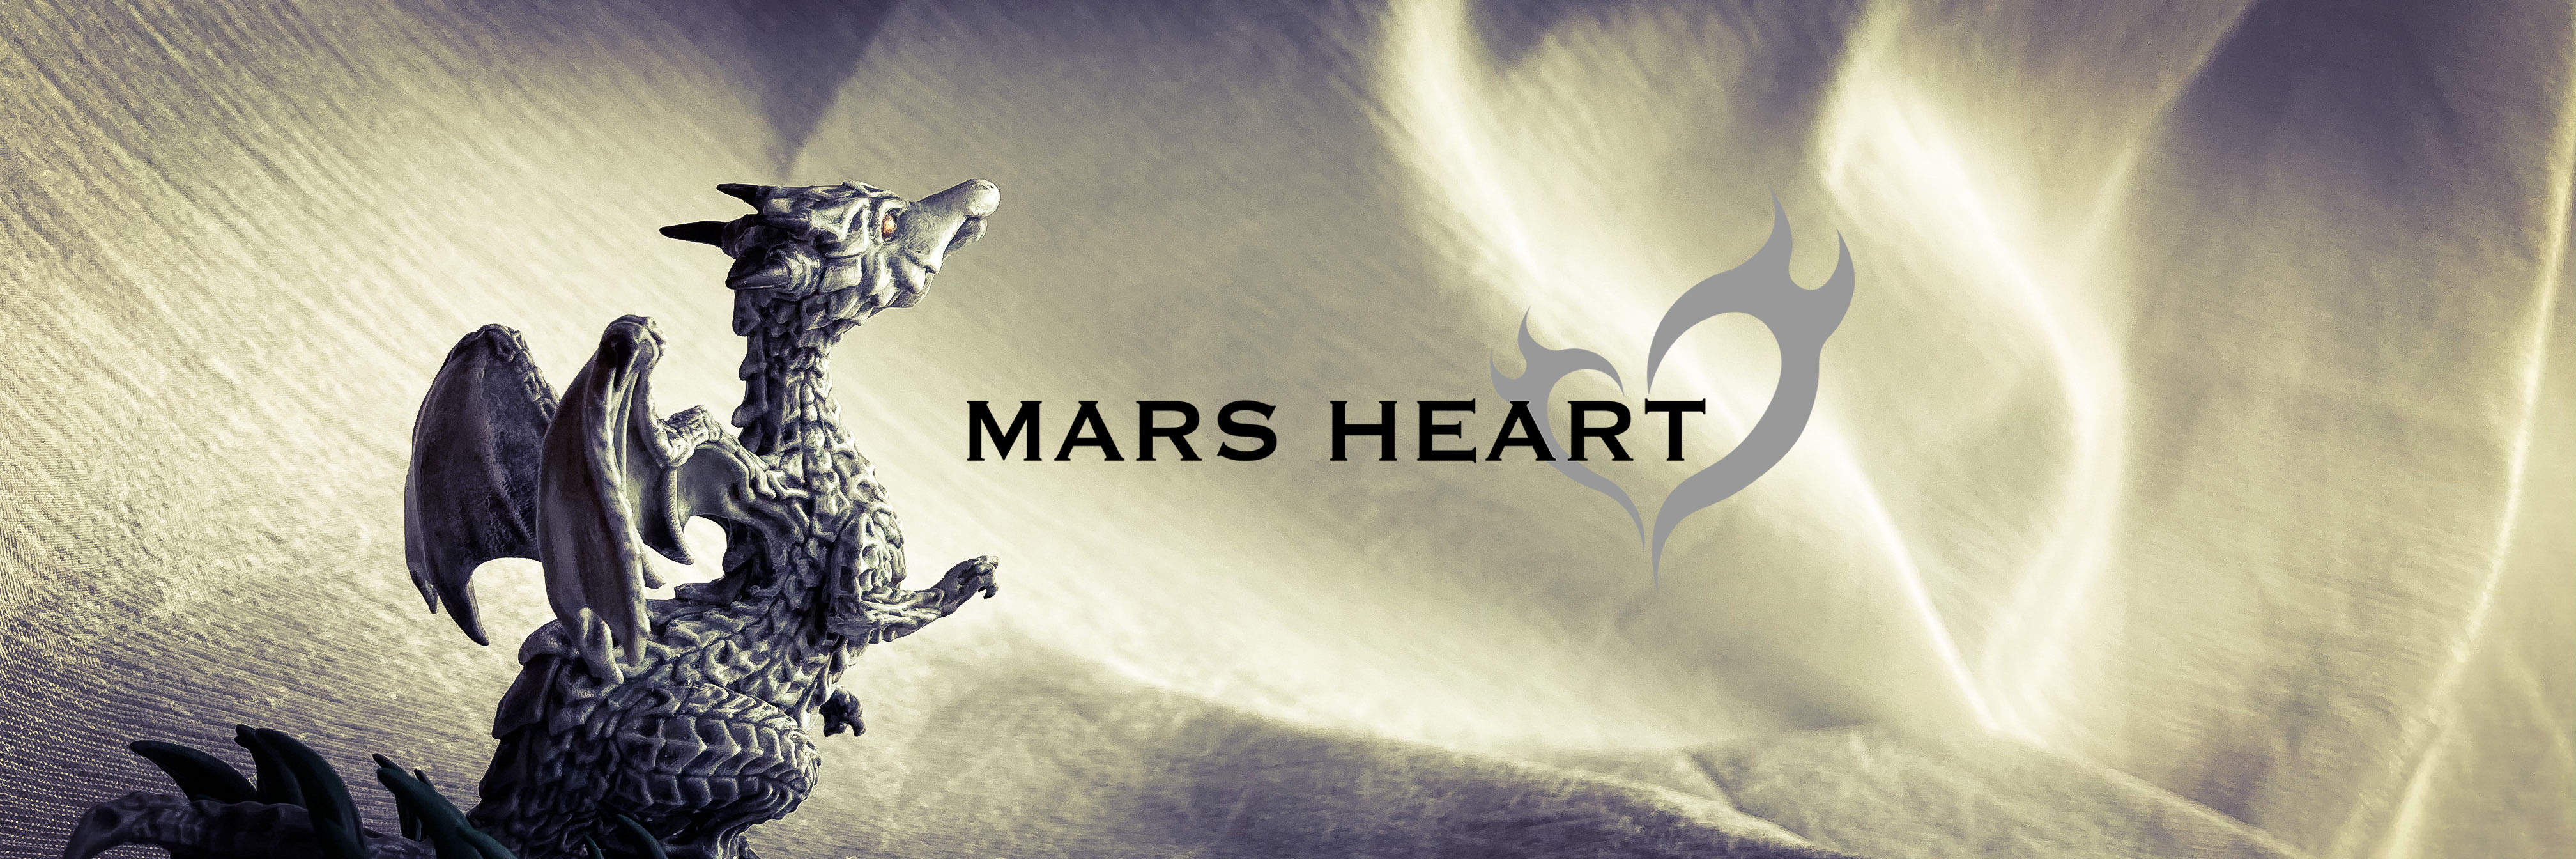 mars heart